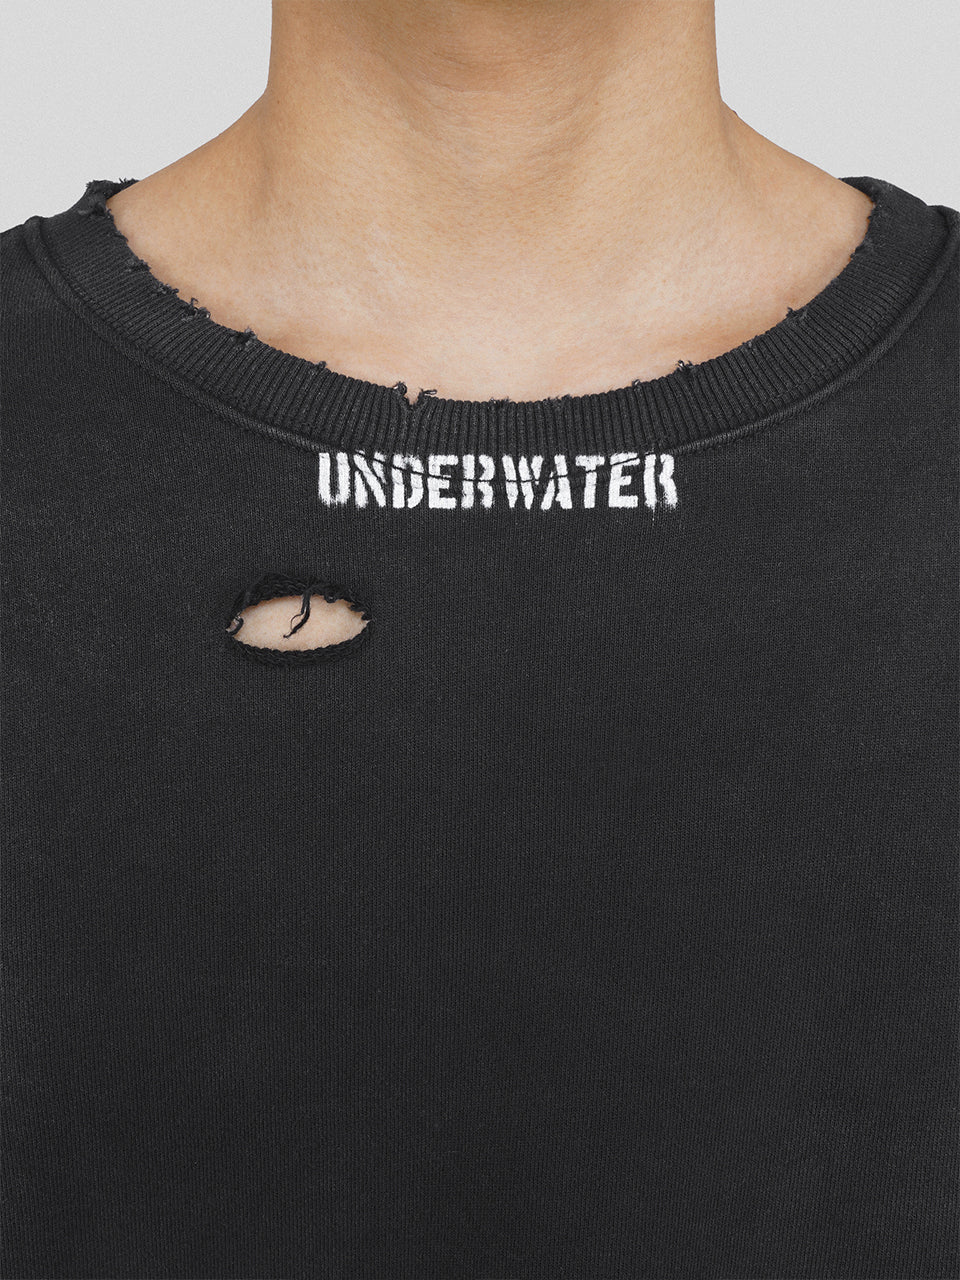 UNDERWATER Mottled Aged Logo Print Sweatshirt